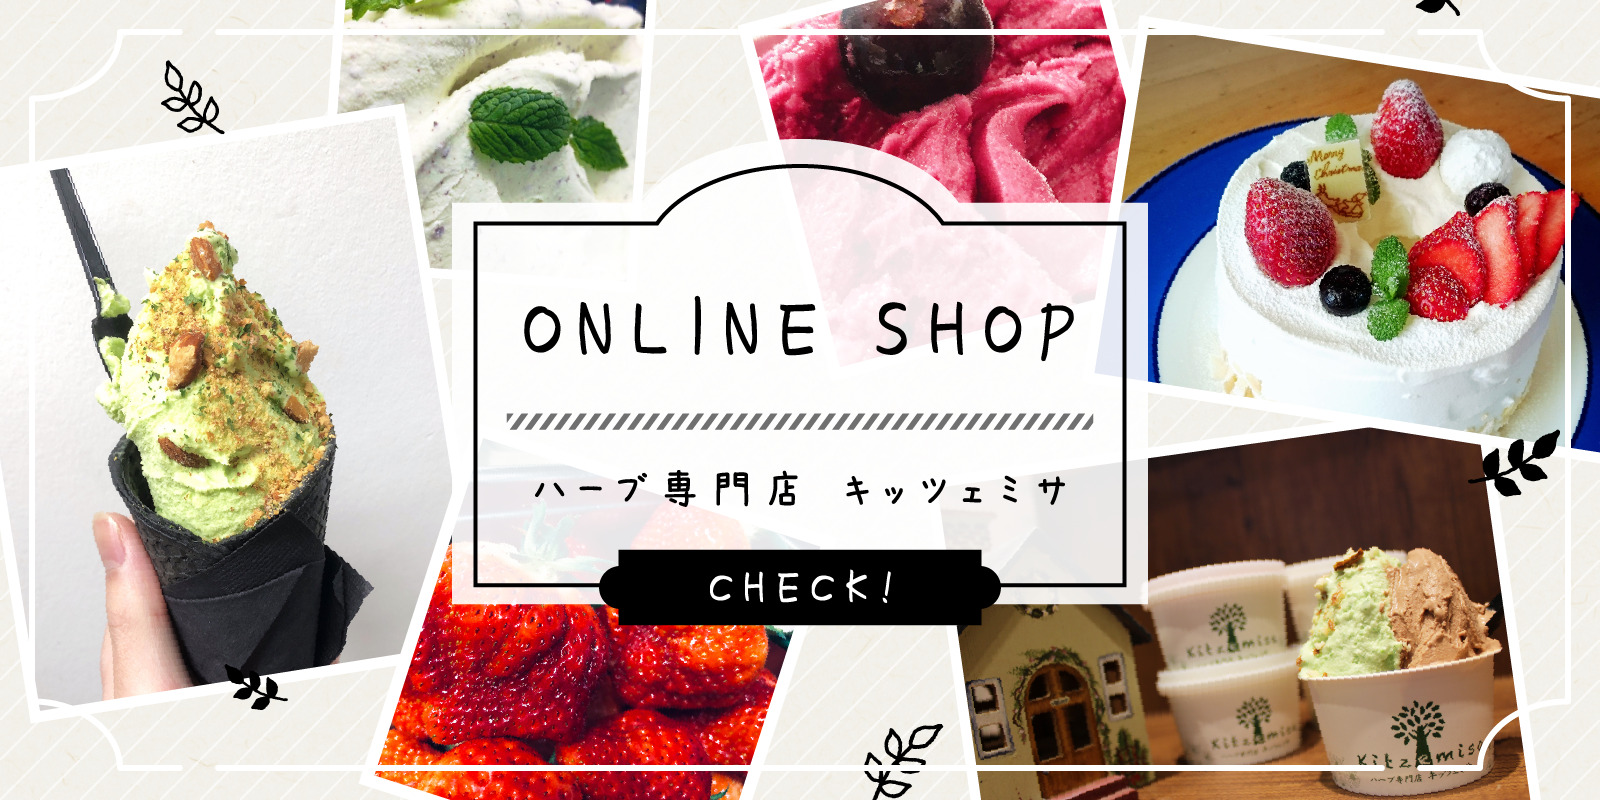 ONLINE SHOP ハーブ専門店 キッツェミサ